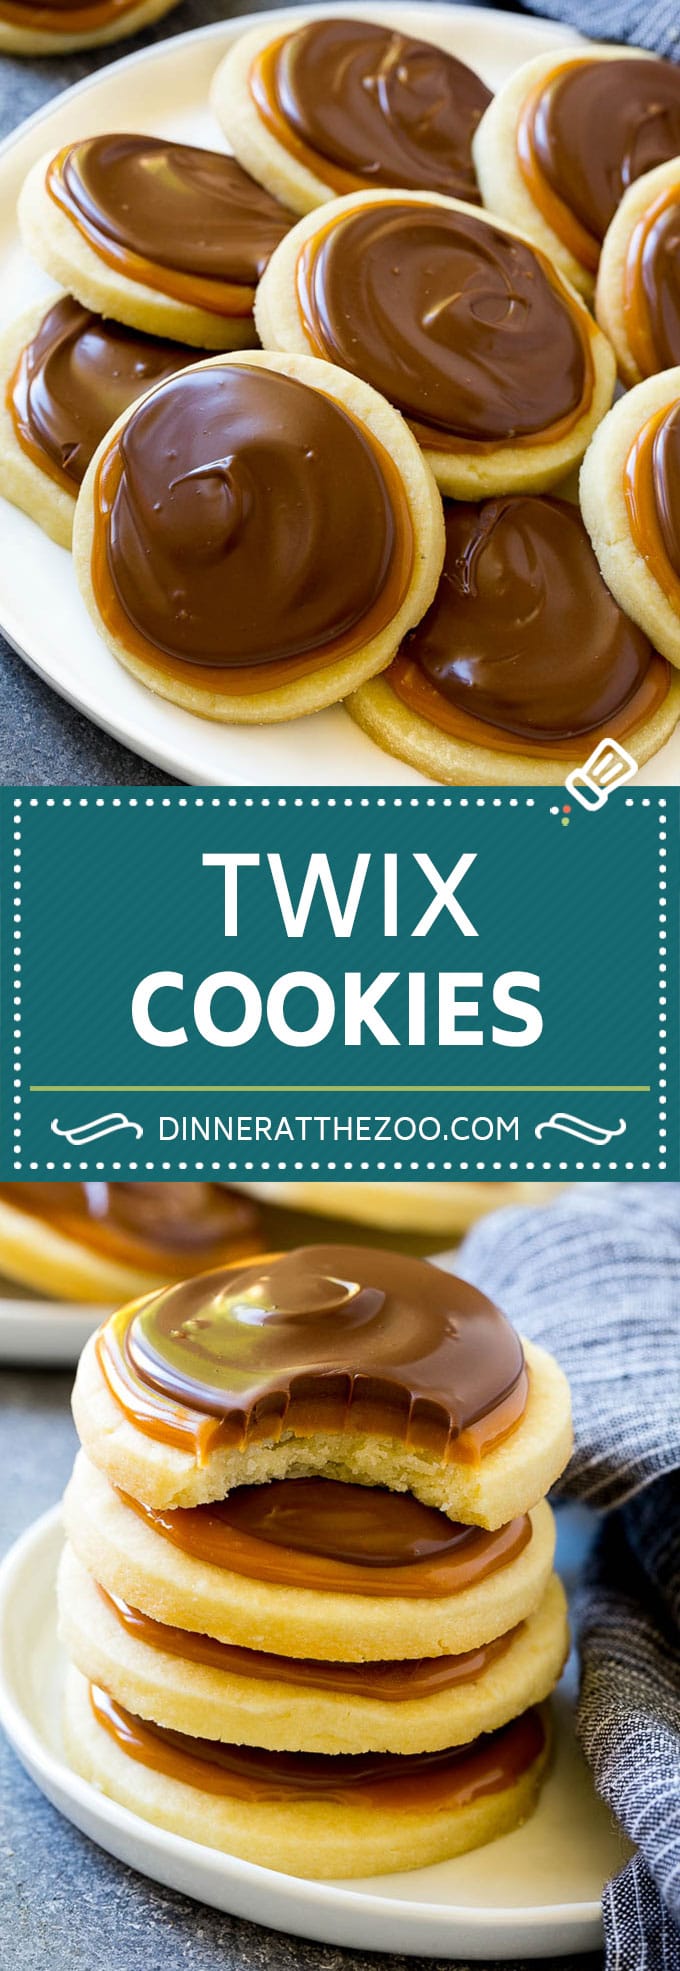 Twix Cookies Recipe | Chocolate Caramel Cookies | Shortbread Cookies #cookies #baking #caramel #chocolate #dessert #dinneratthezoo